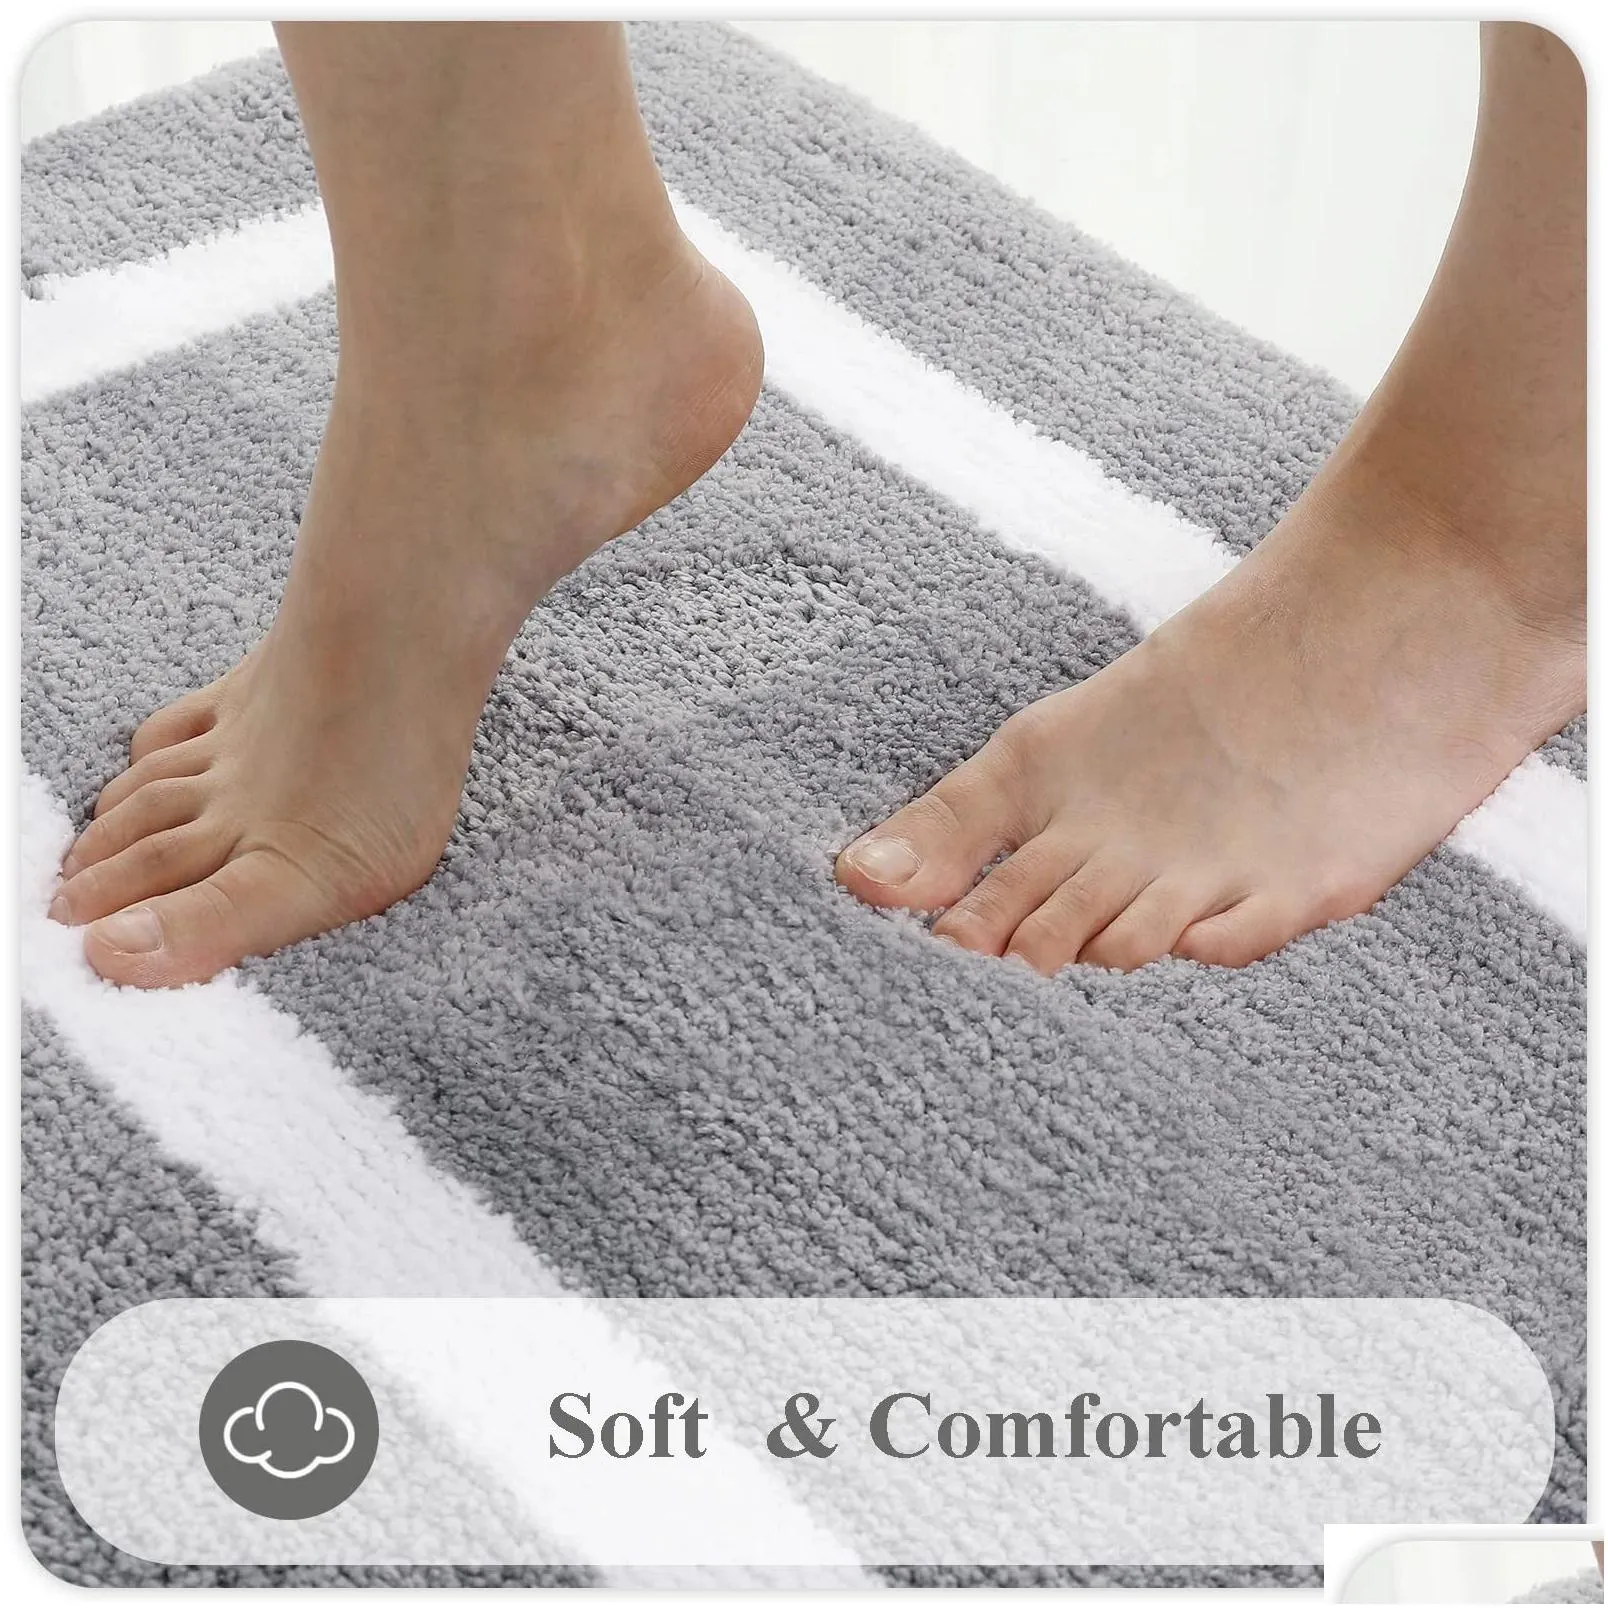 olanly absorbent bath mat bathroom rug shower pad non-slip bedroom foot carpet soft thick living room plush doormat floor decor 240125